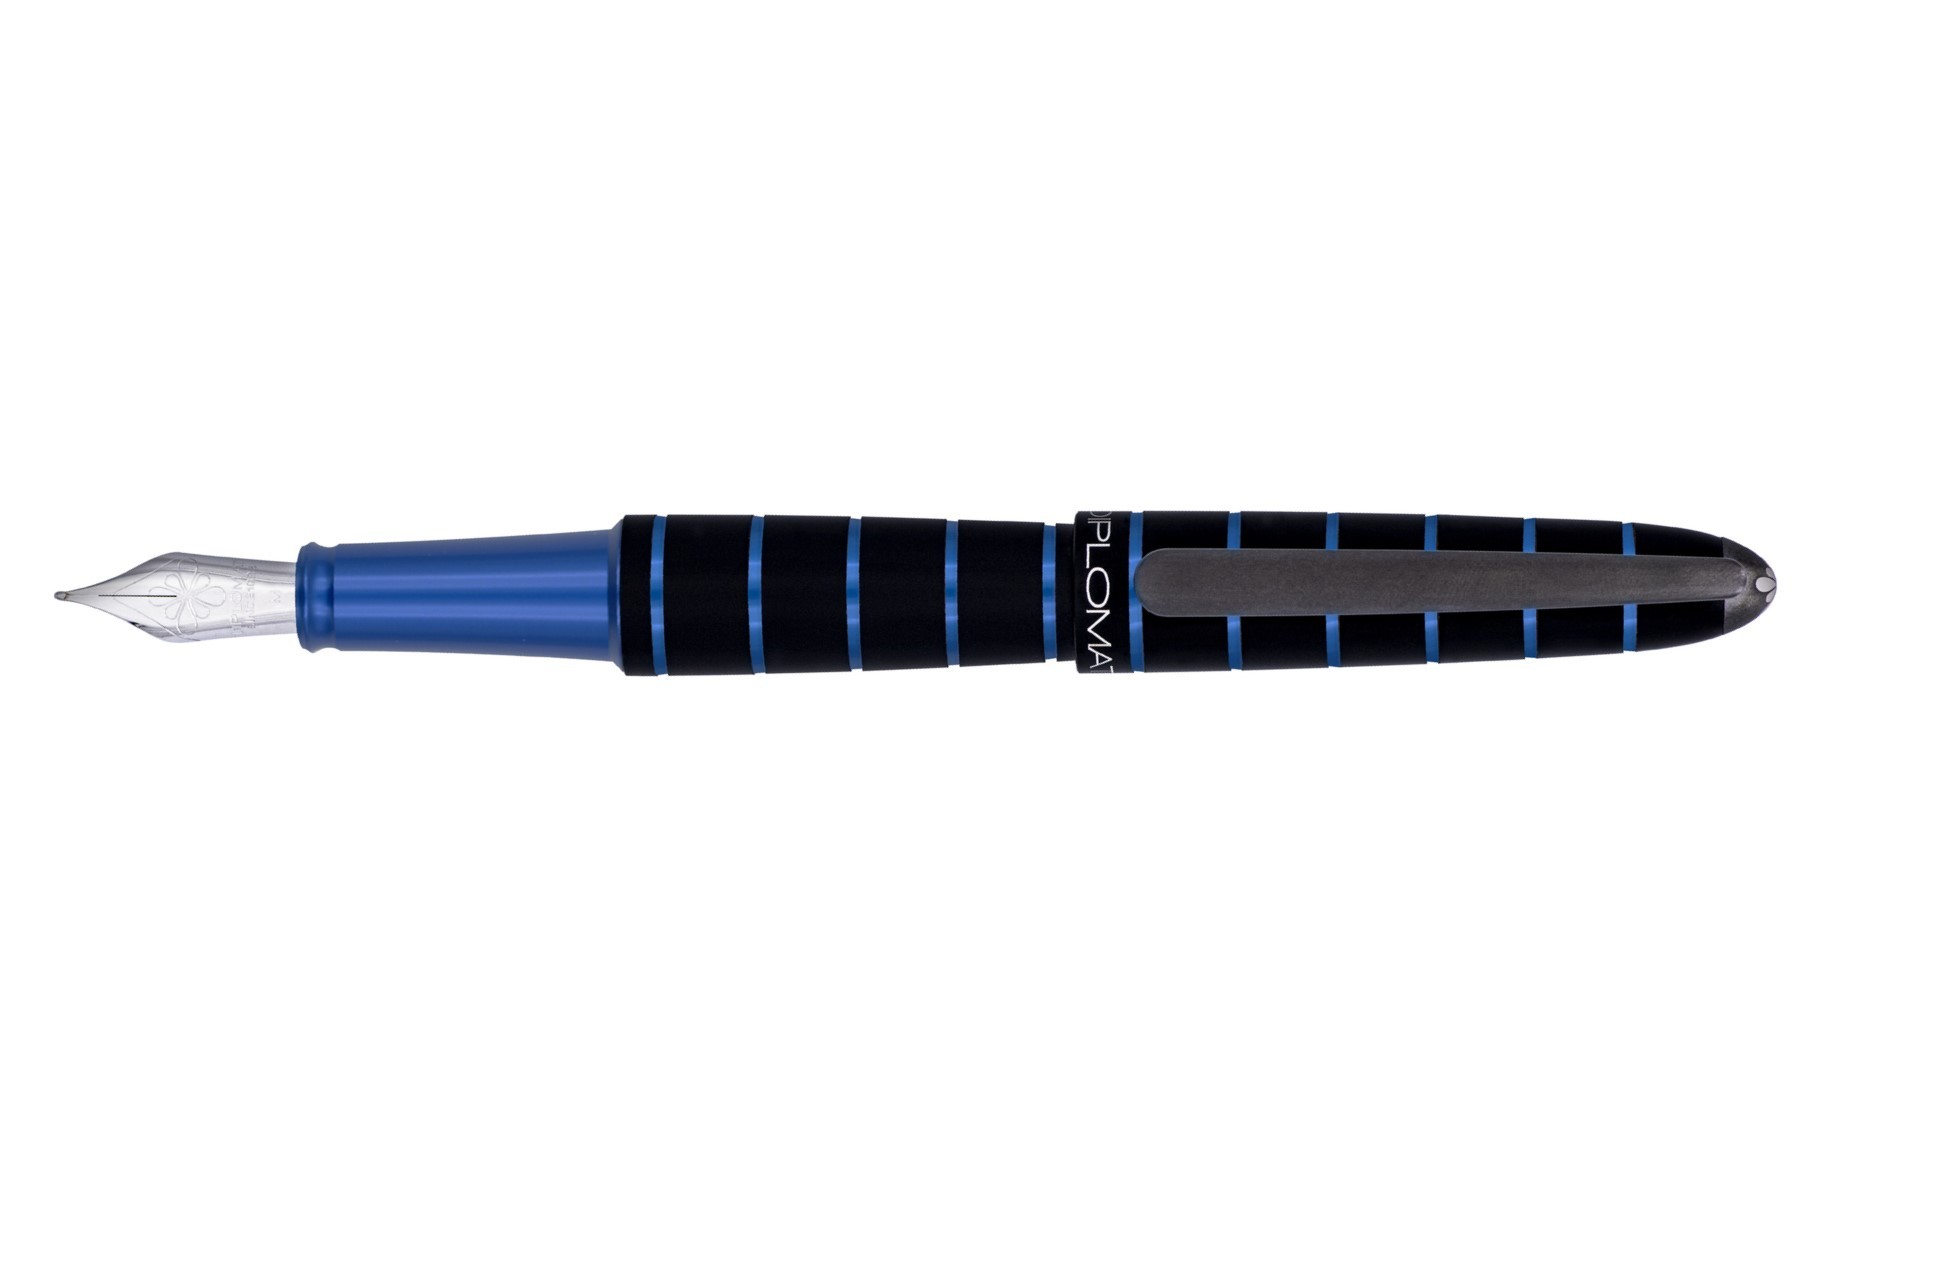 Diplomat Elox Ring Black/Blue Fountain Pen Steel Nib